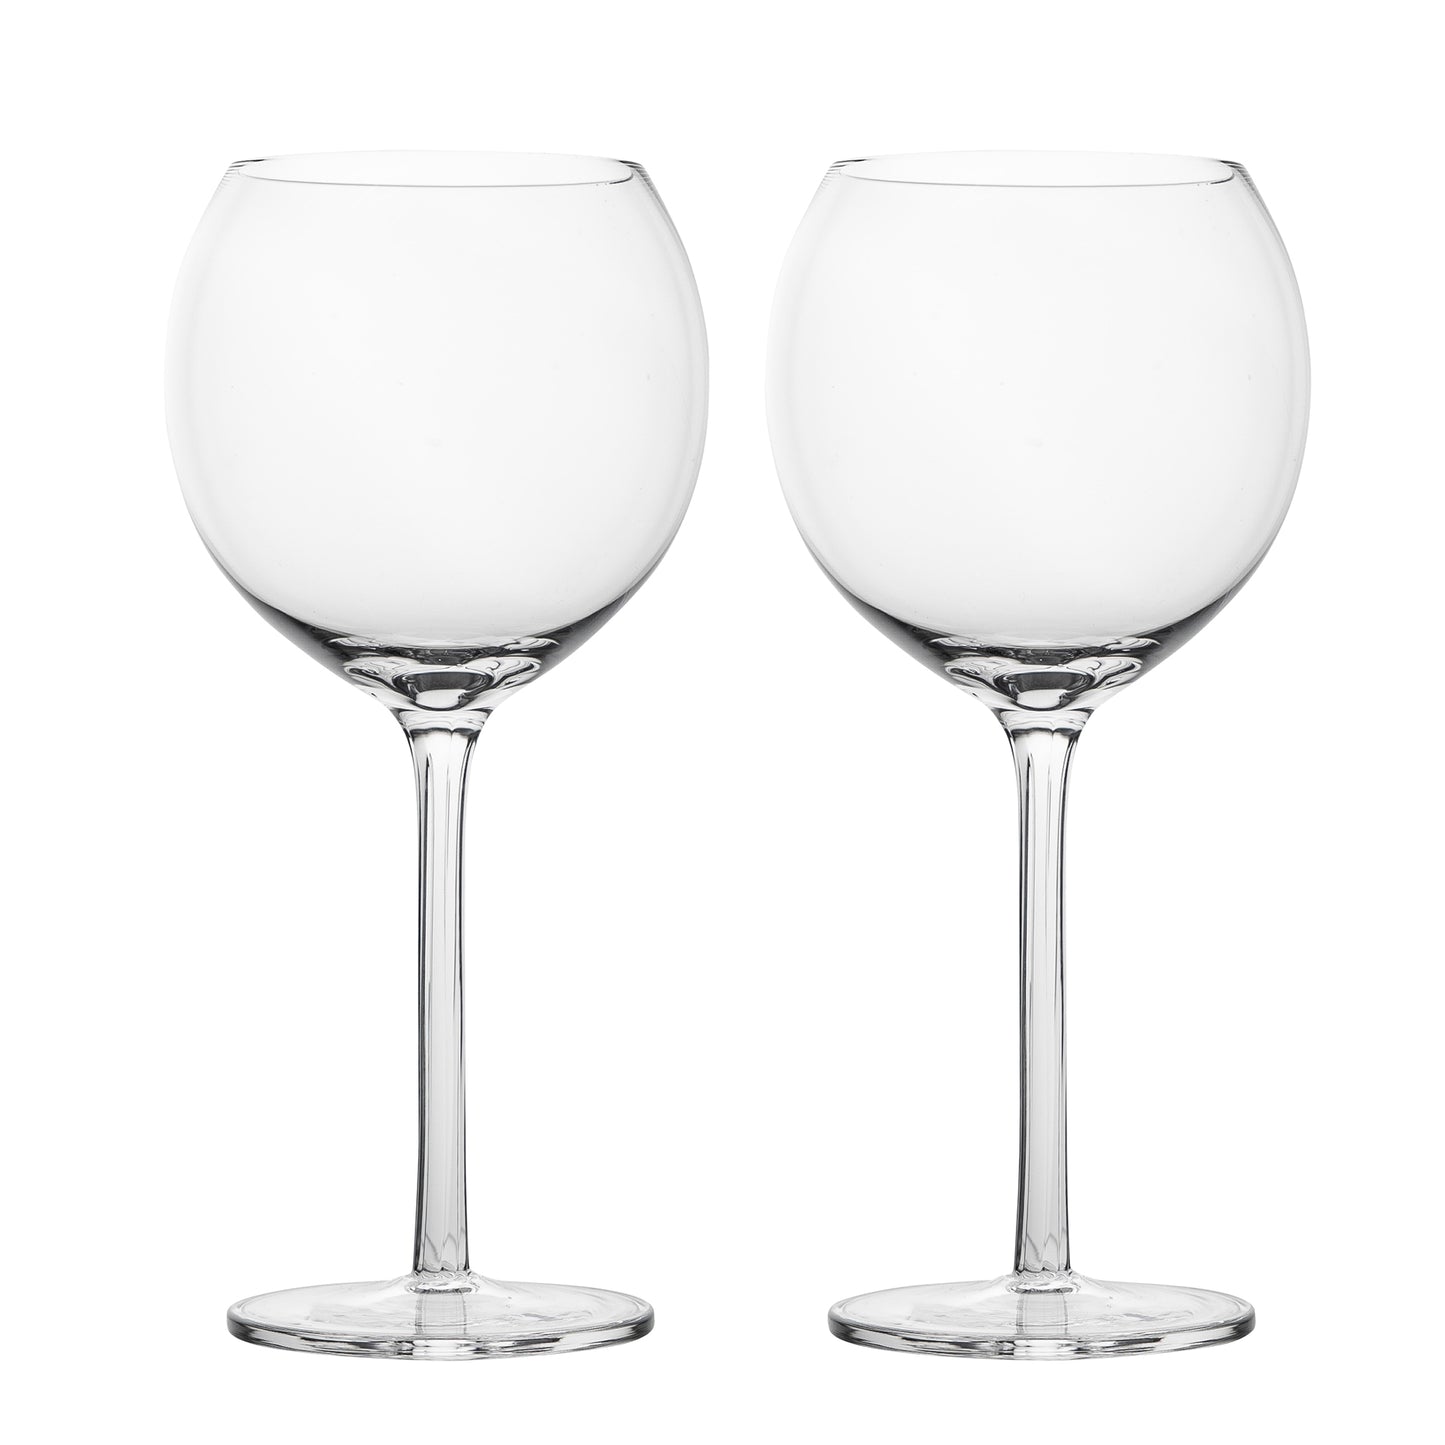 Sagaform Wine Glasses, Set of 2  Widgeteer Inc.   5018263 0001 5018263 front